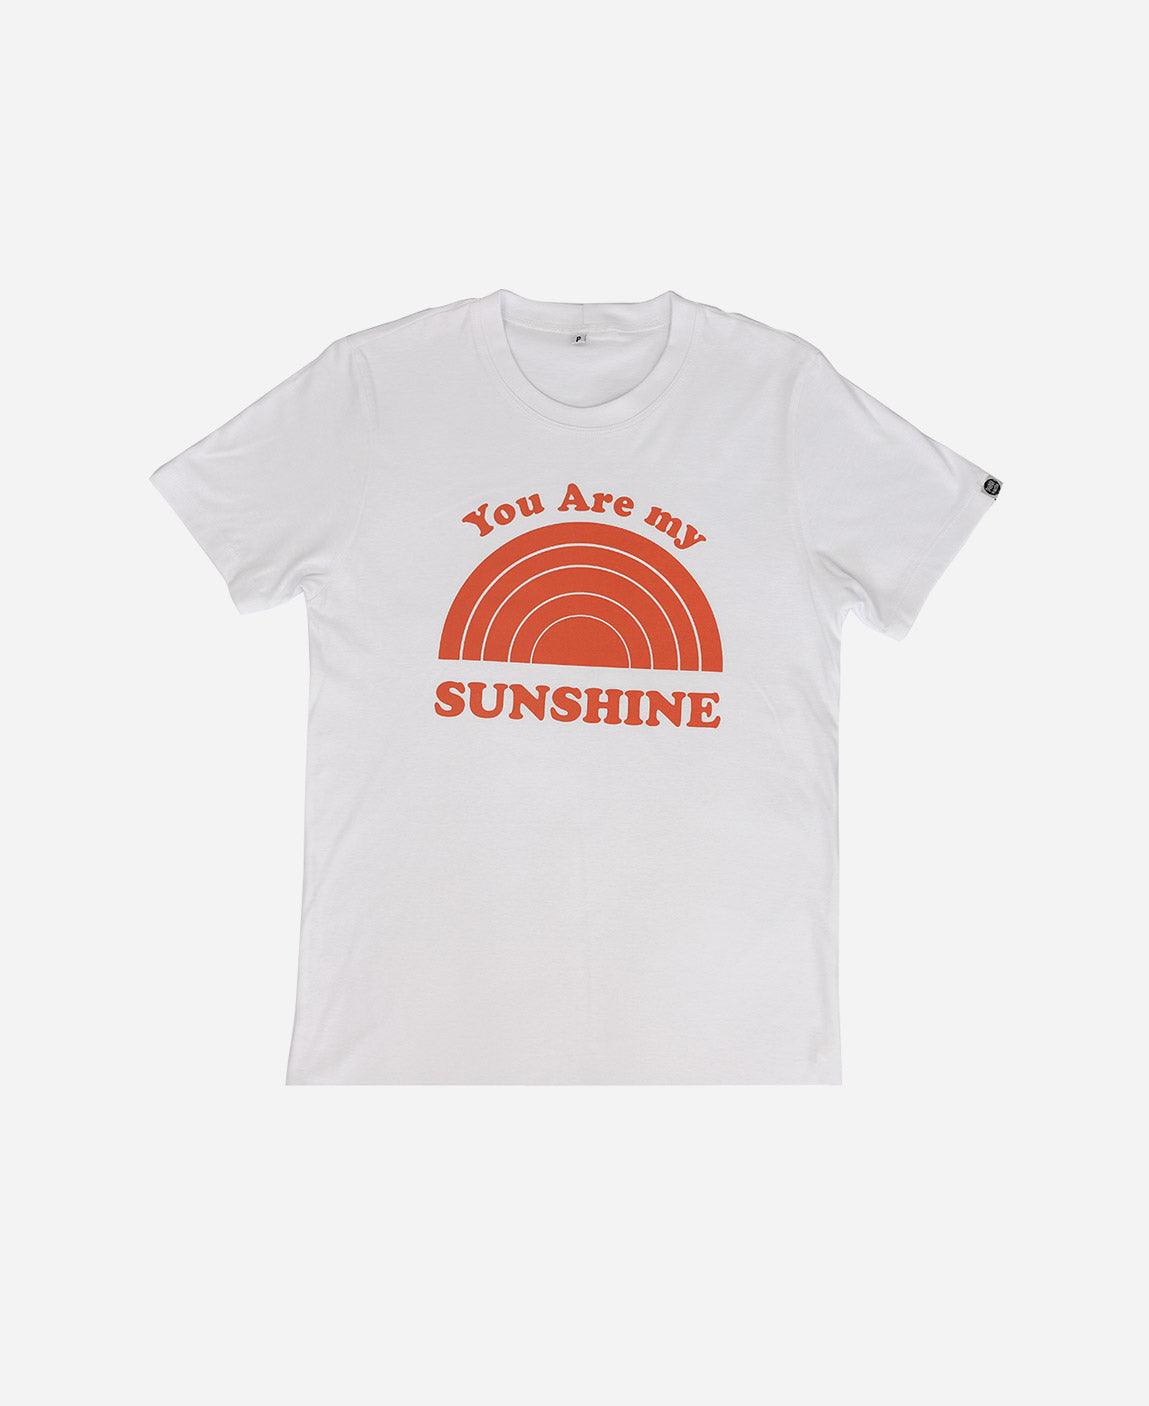 Camiseta Adulto You Are My Sunshine - MiniMalista Baby - b2b, com-desconto-mm10, Meia Estação, Menino, Neutro, Unissex -bebê-minimalista-estiloso